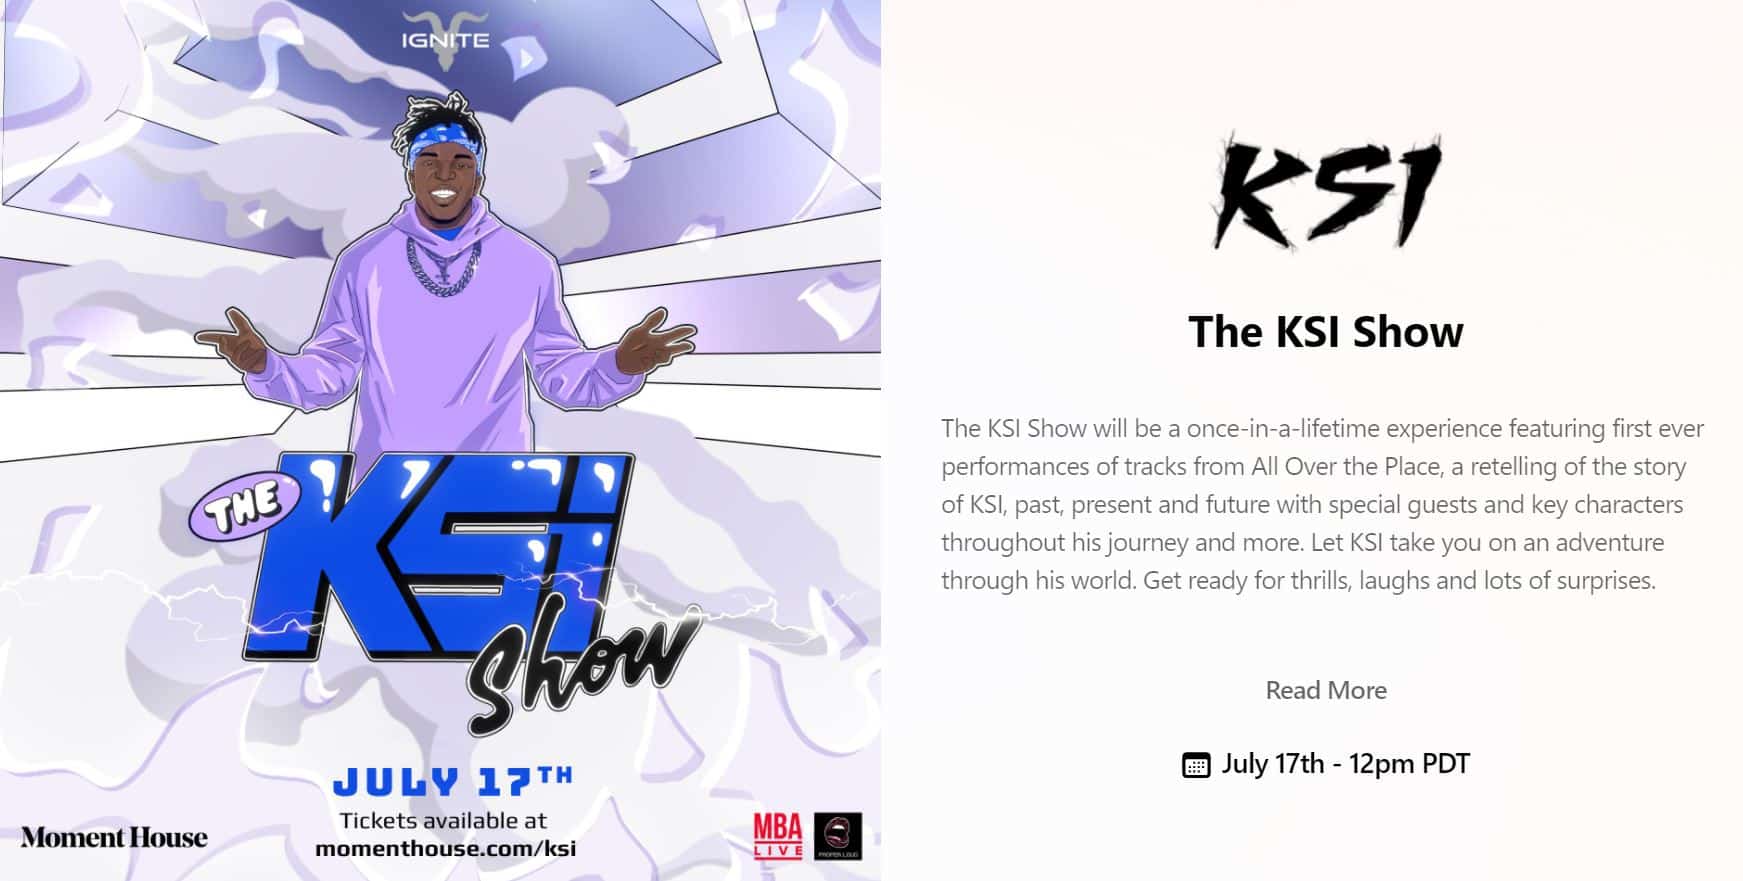 The KSI show website